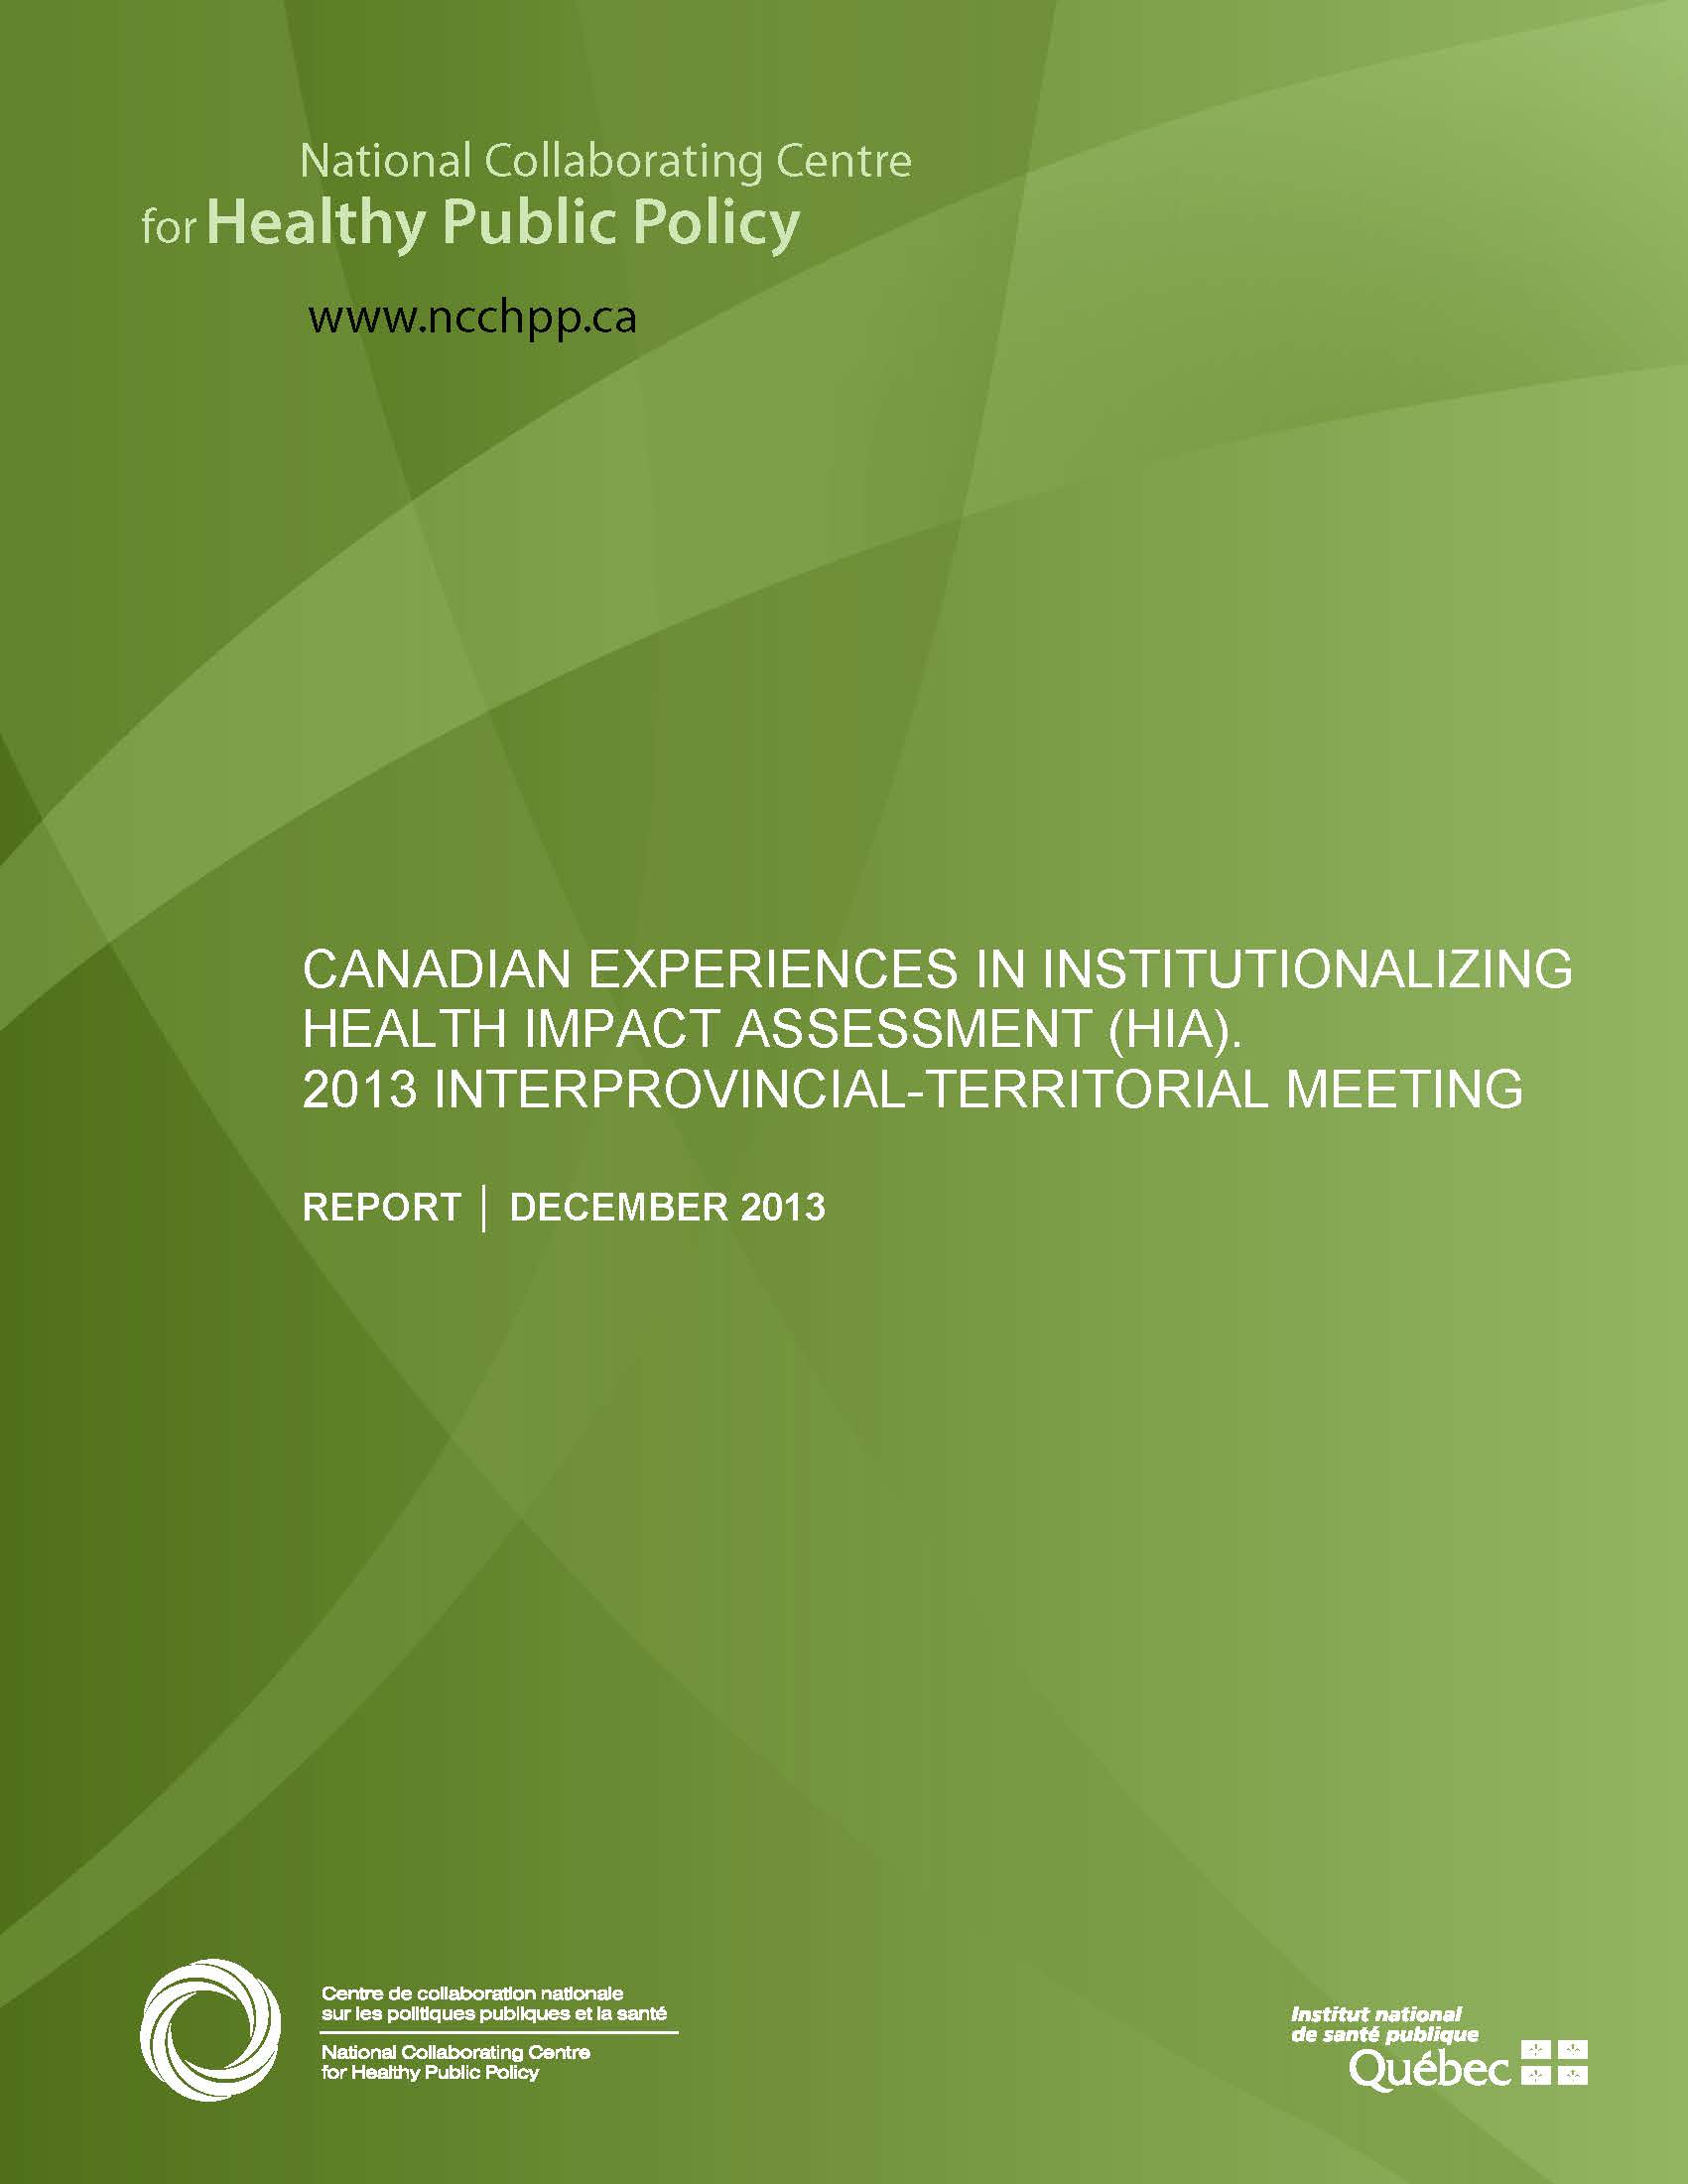 Canadian Experiences in Institutionalizing Health Impact Assessment (HIA). 2013 Interprovincial-Territorial Meeting: Report